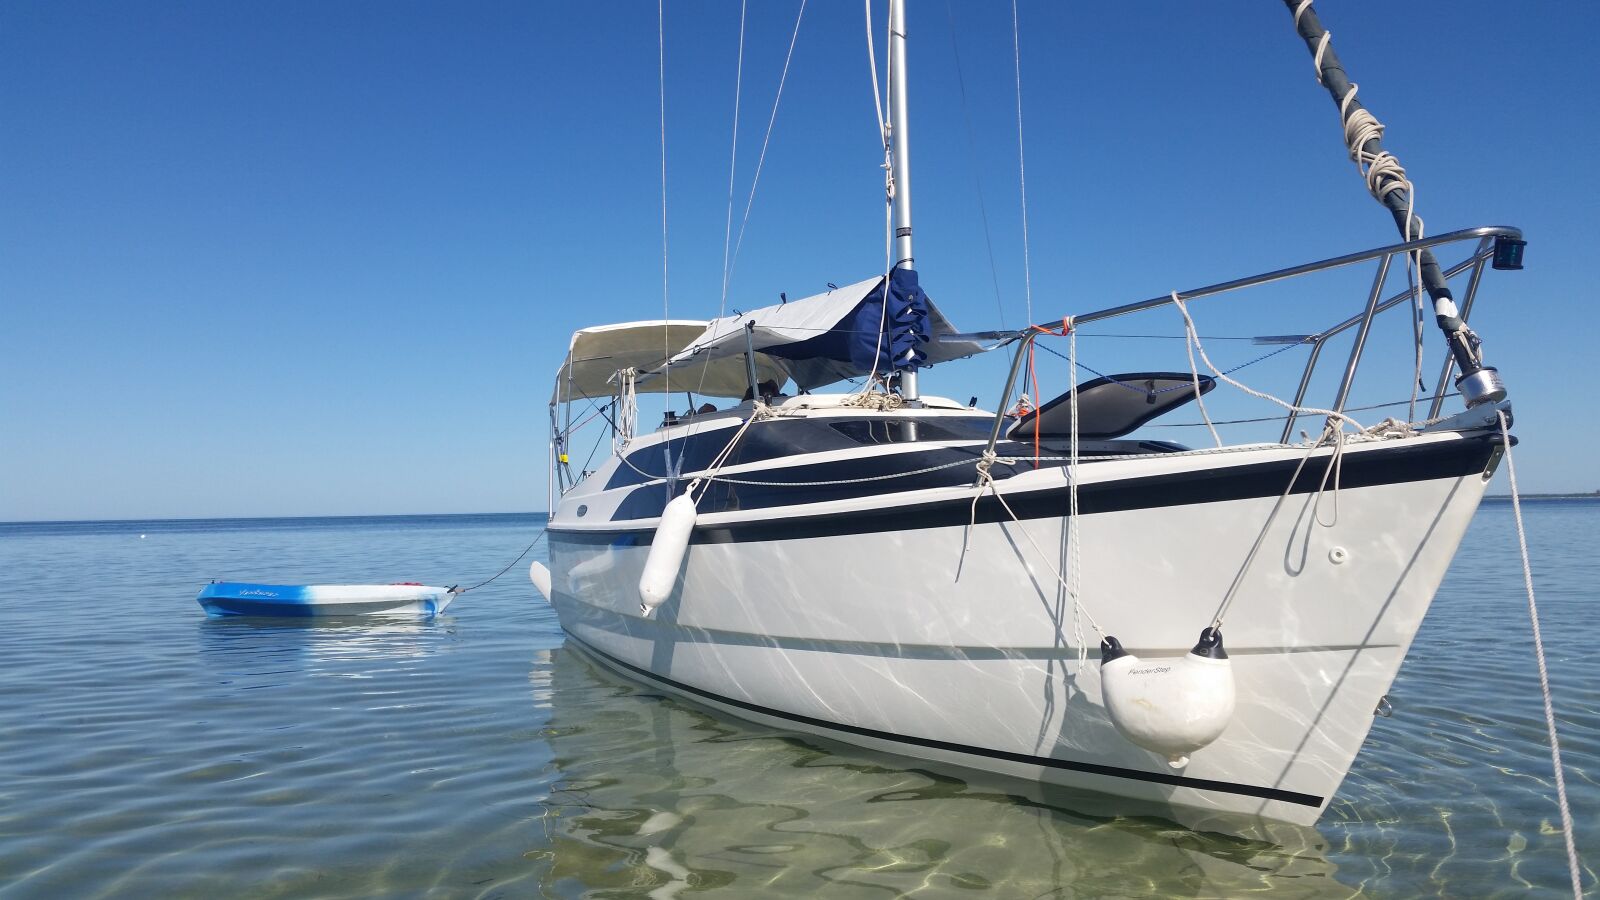 Samsung Galaxy S5 sample photo. Boat, yacht, sailboat photography